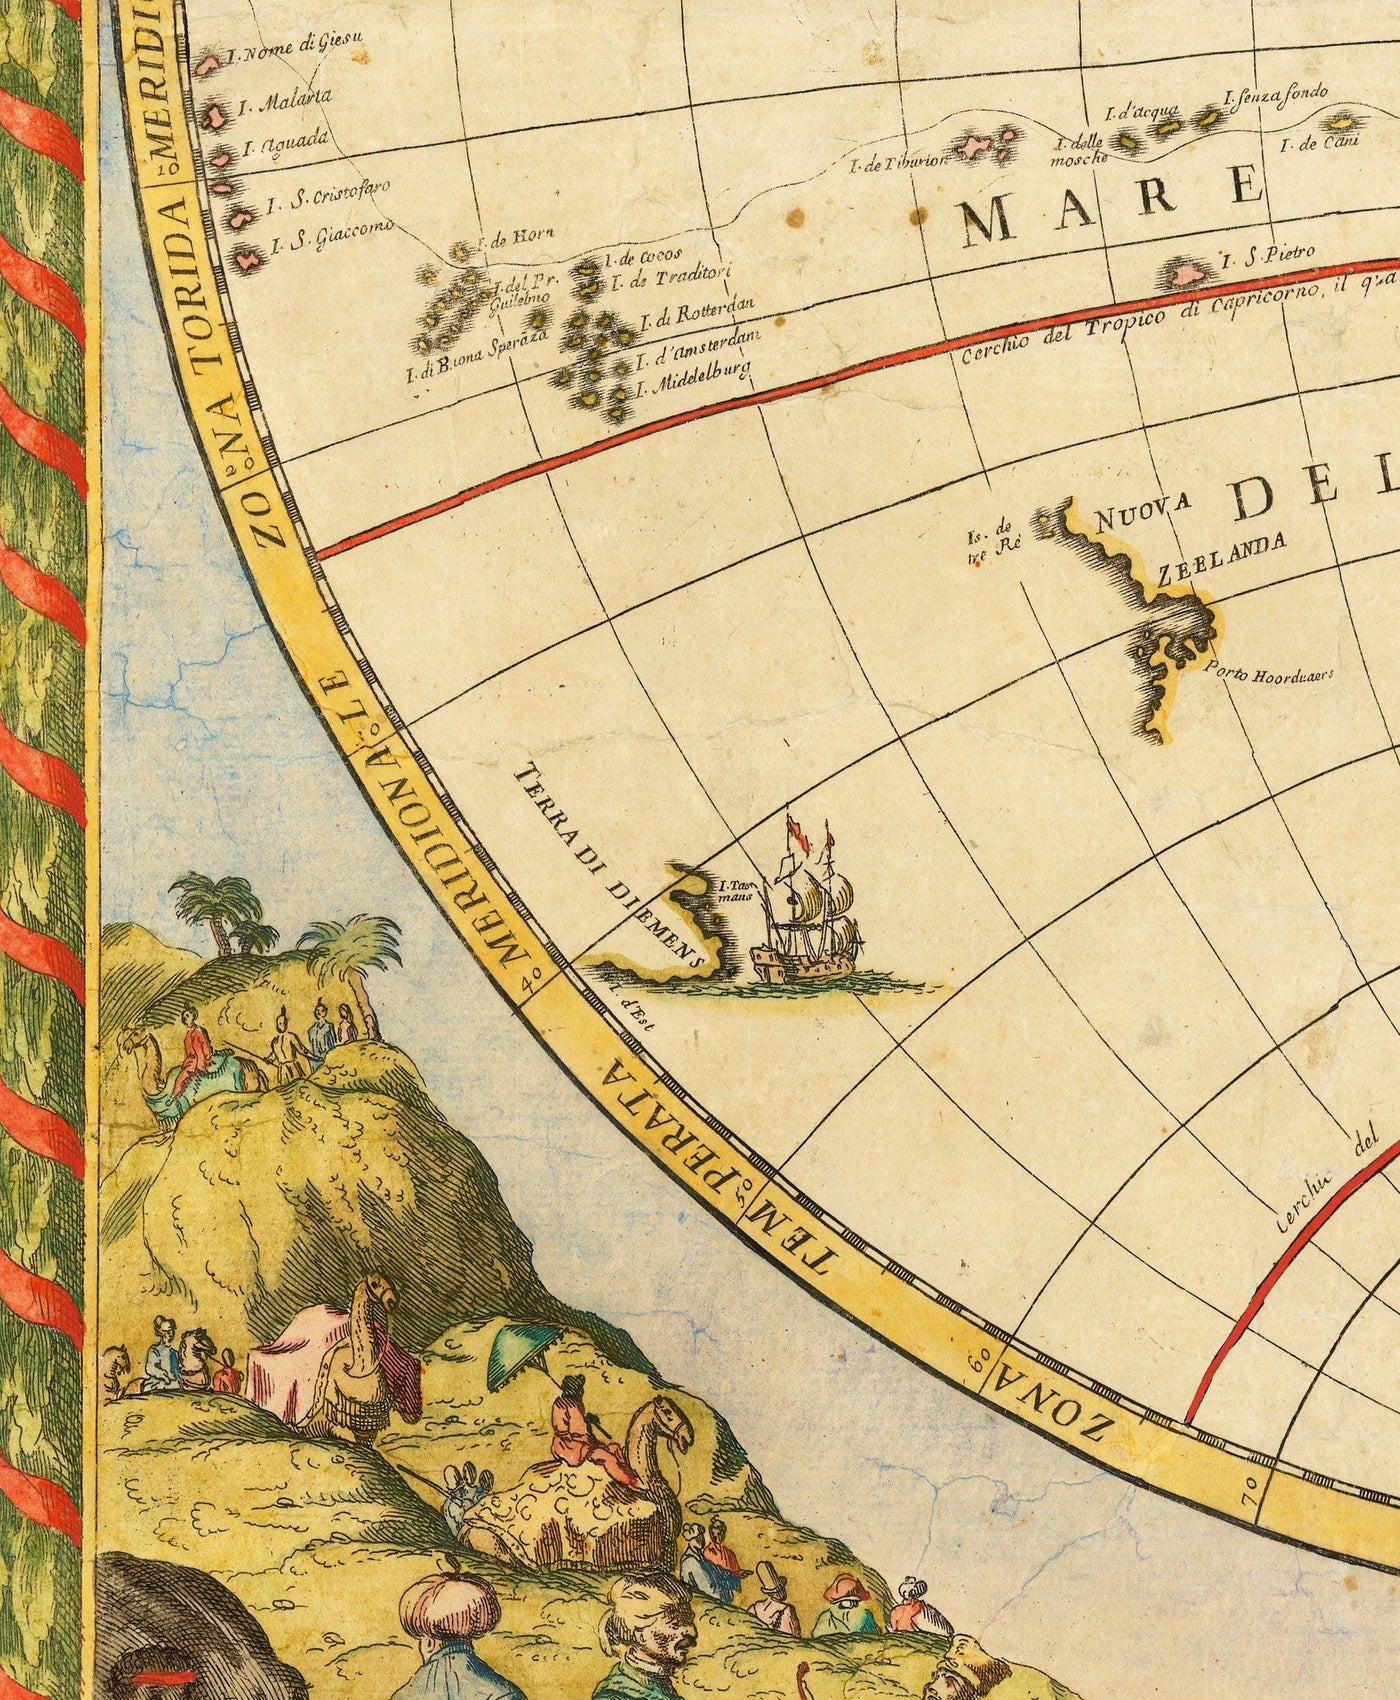 Old World Atlas Karte, 1700 von Paolo Petrini - Seltene antike handgefärterte Karte